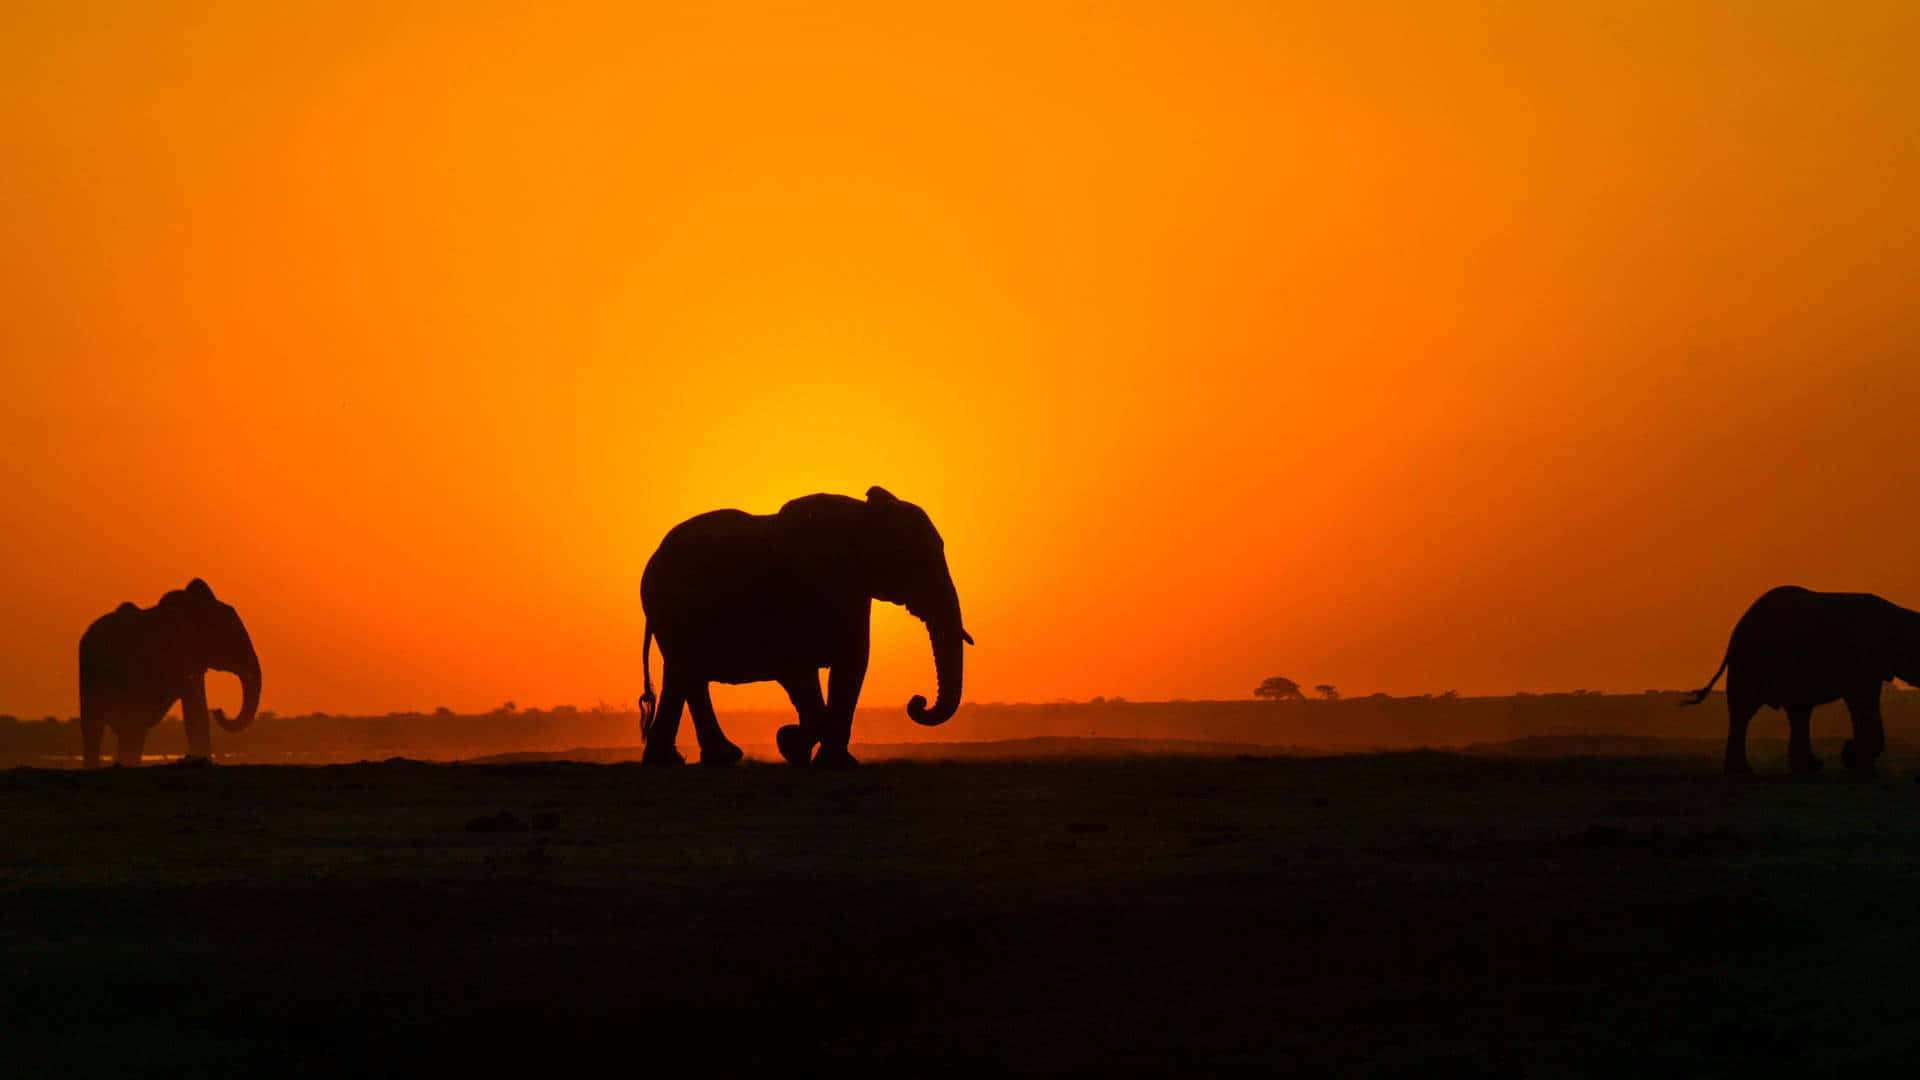 A majestic elephant walking gracefully through a field